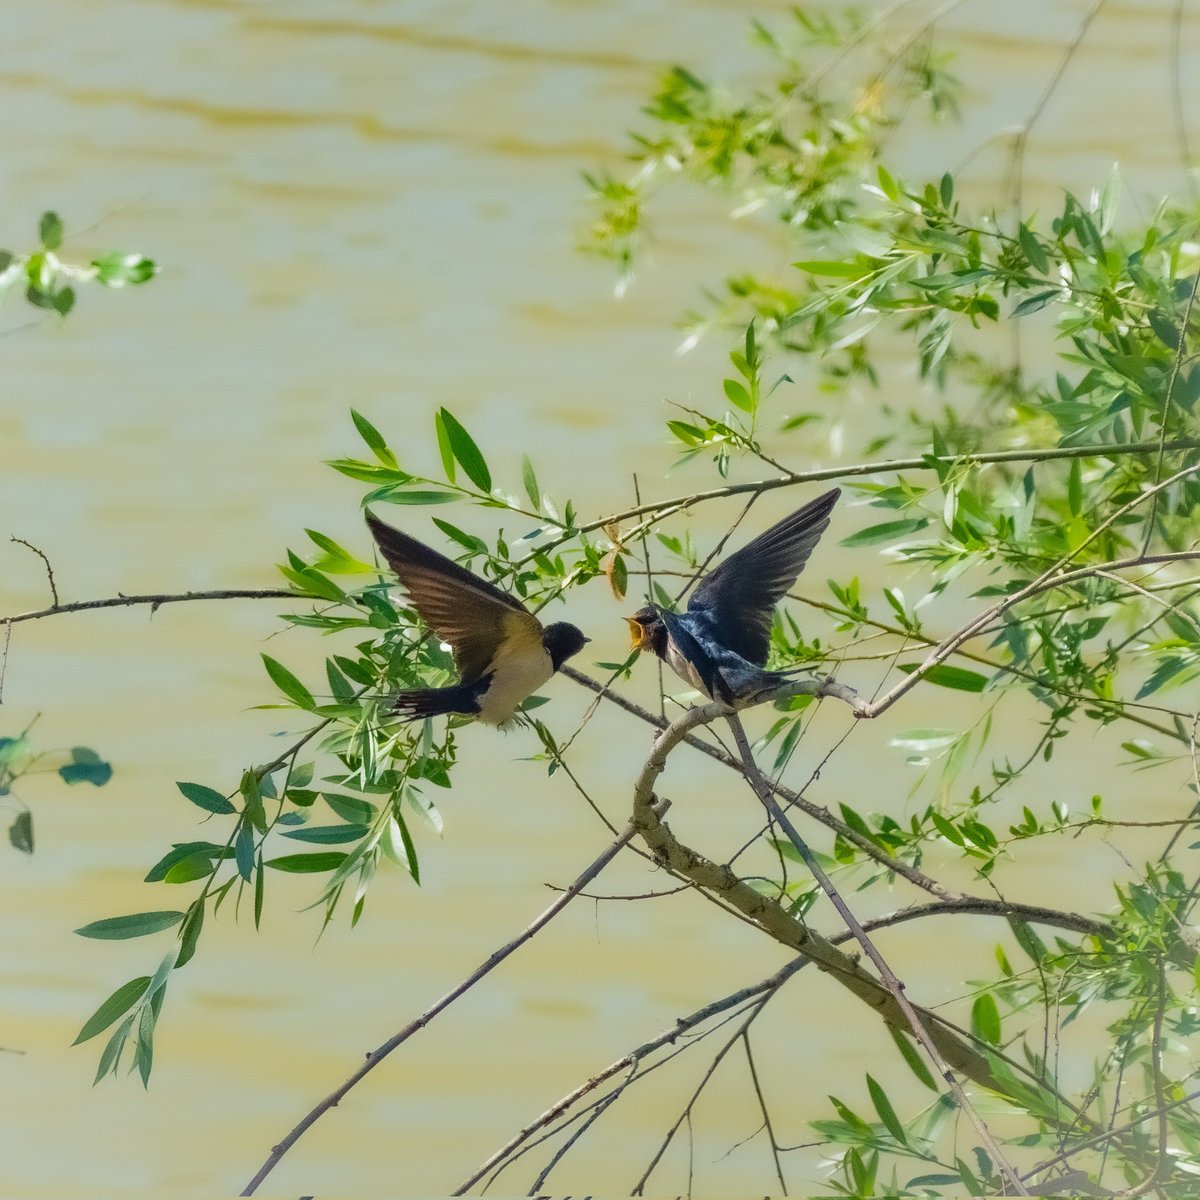 Golondrinas (río Guadalquivir, Córdoba) #golondrinas #swallows #naturaleza #nature #NaturePhotography #birdwatching #birdwachingphotography #avesdeespaña #birdsofeurope #wildnature #RíoGuadalquivir #guadalquivir #Córdoba